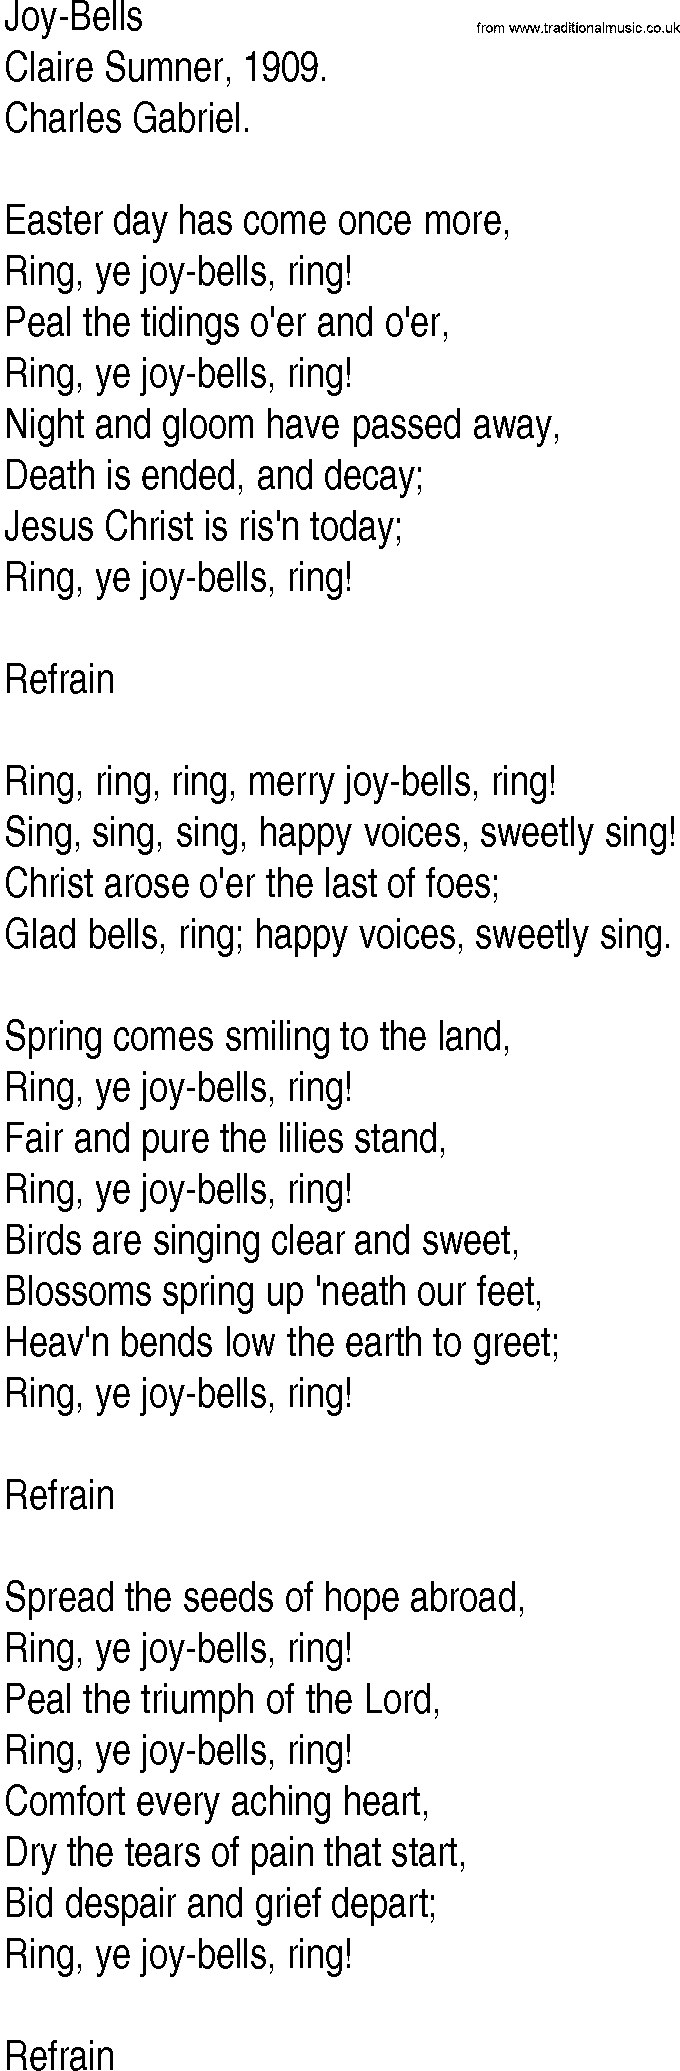 Hymn and Gospel Song: Joy-Bells by Claire Sumner lyrics